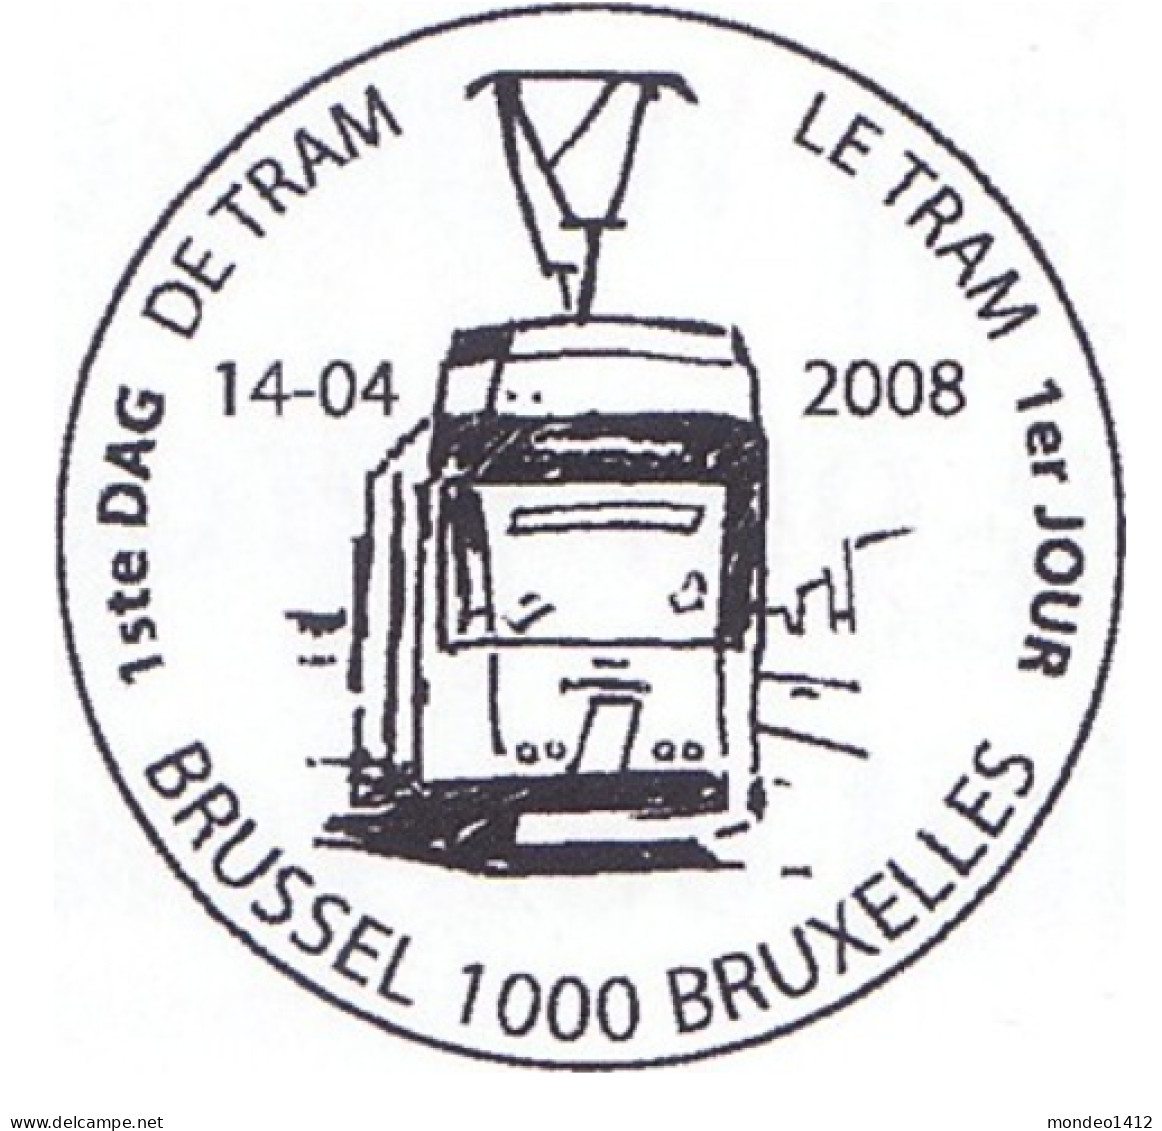 België OBP 3772/3774 - Vervoer Transport De Tram - Gebraucht